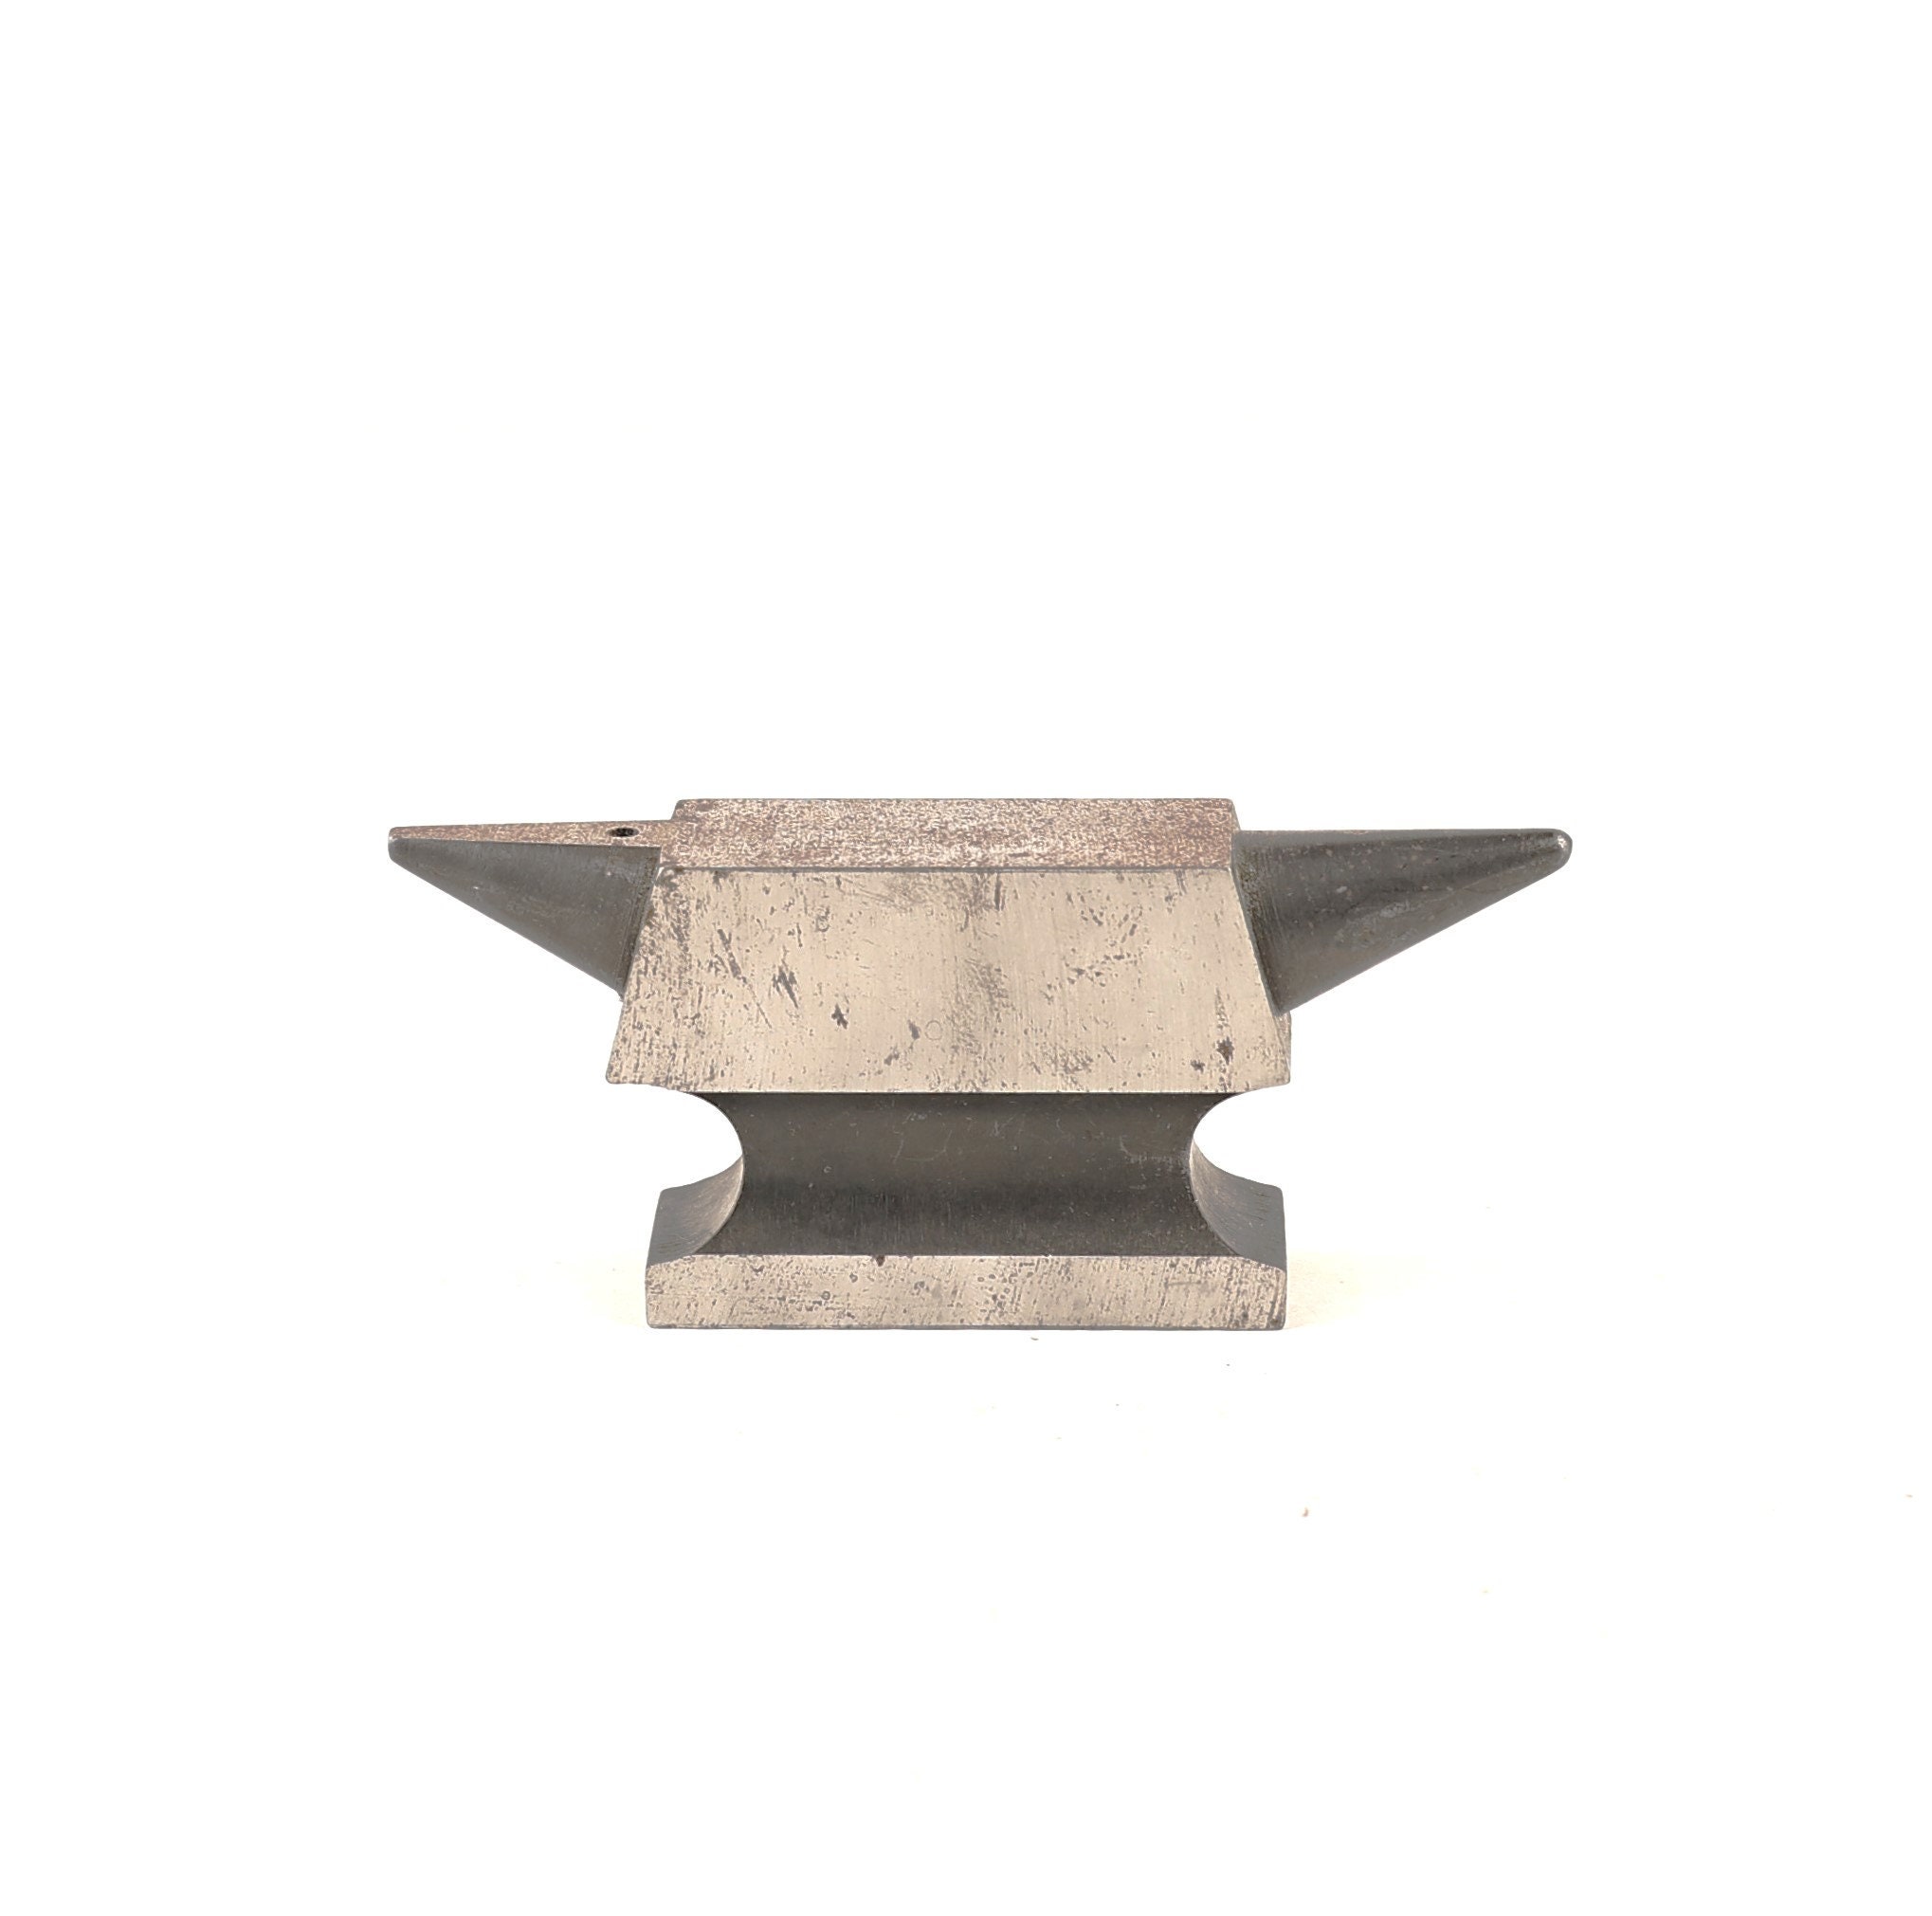 Steel Bench Block 2 x 2 x 3/4 Flattening Hammering Anvil Jewelry